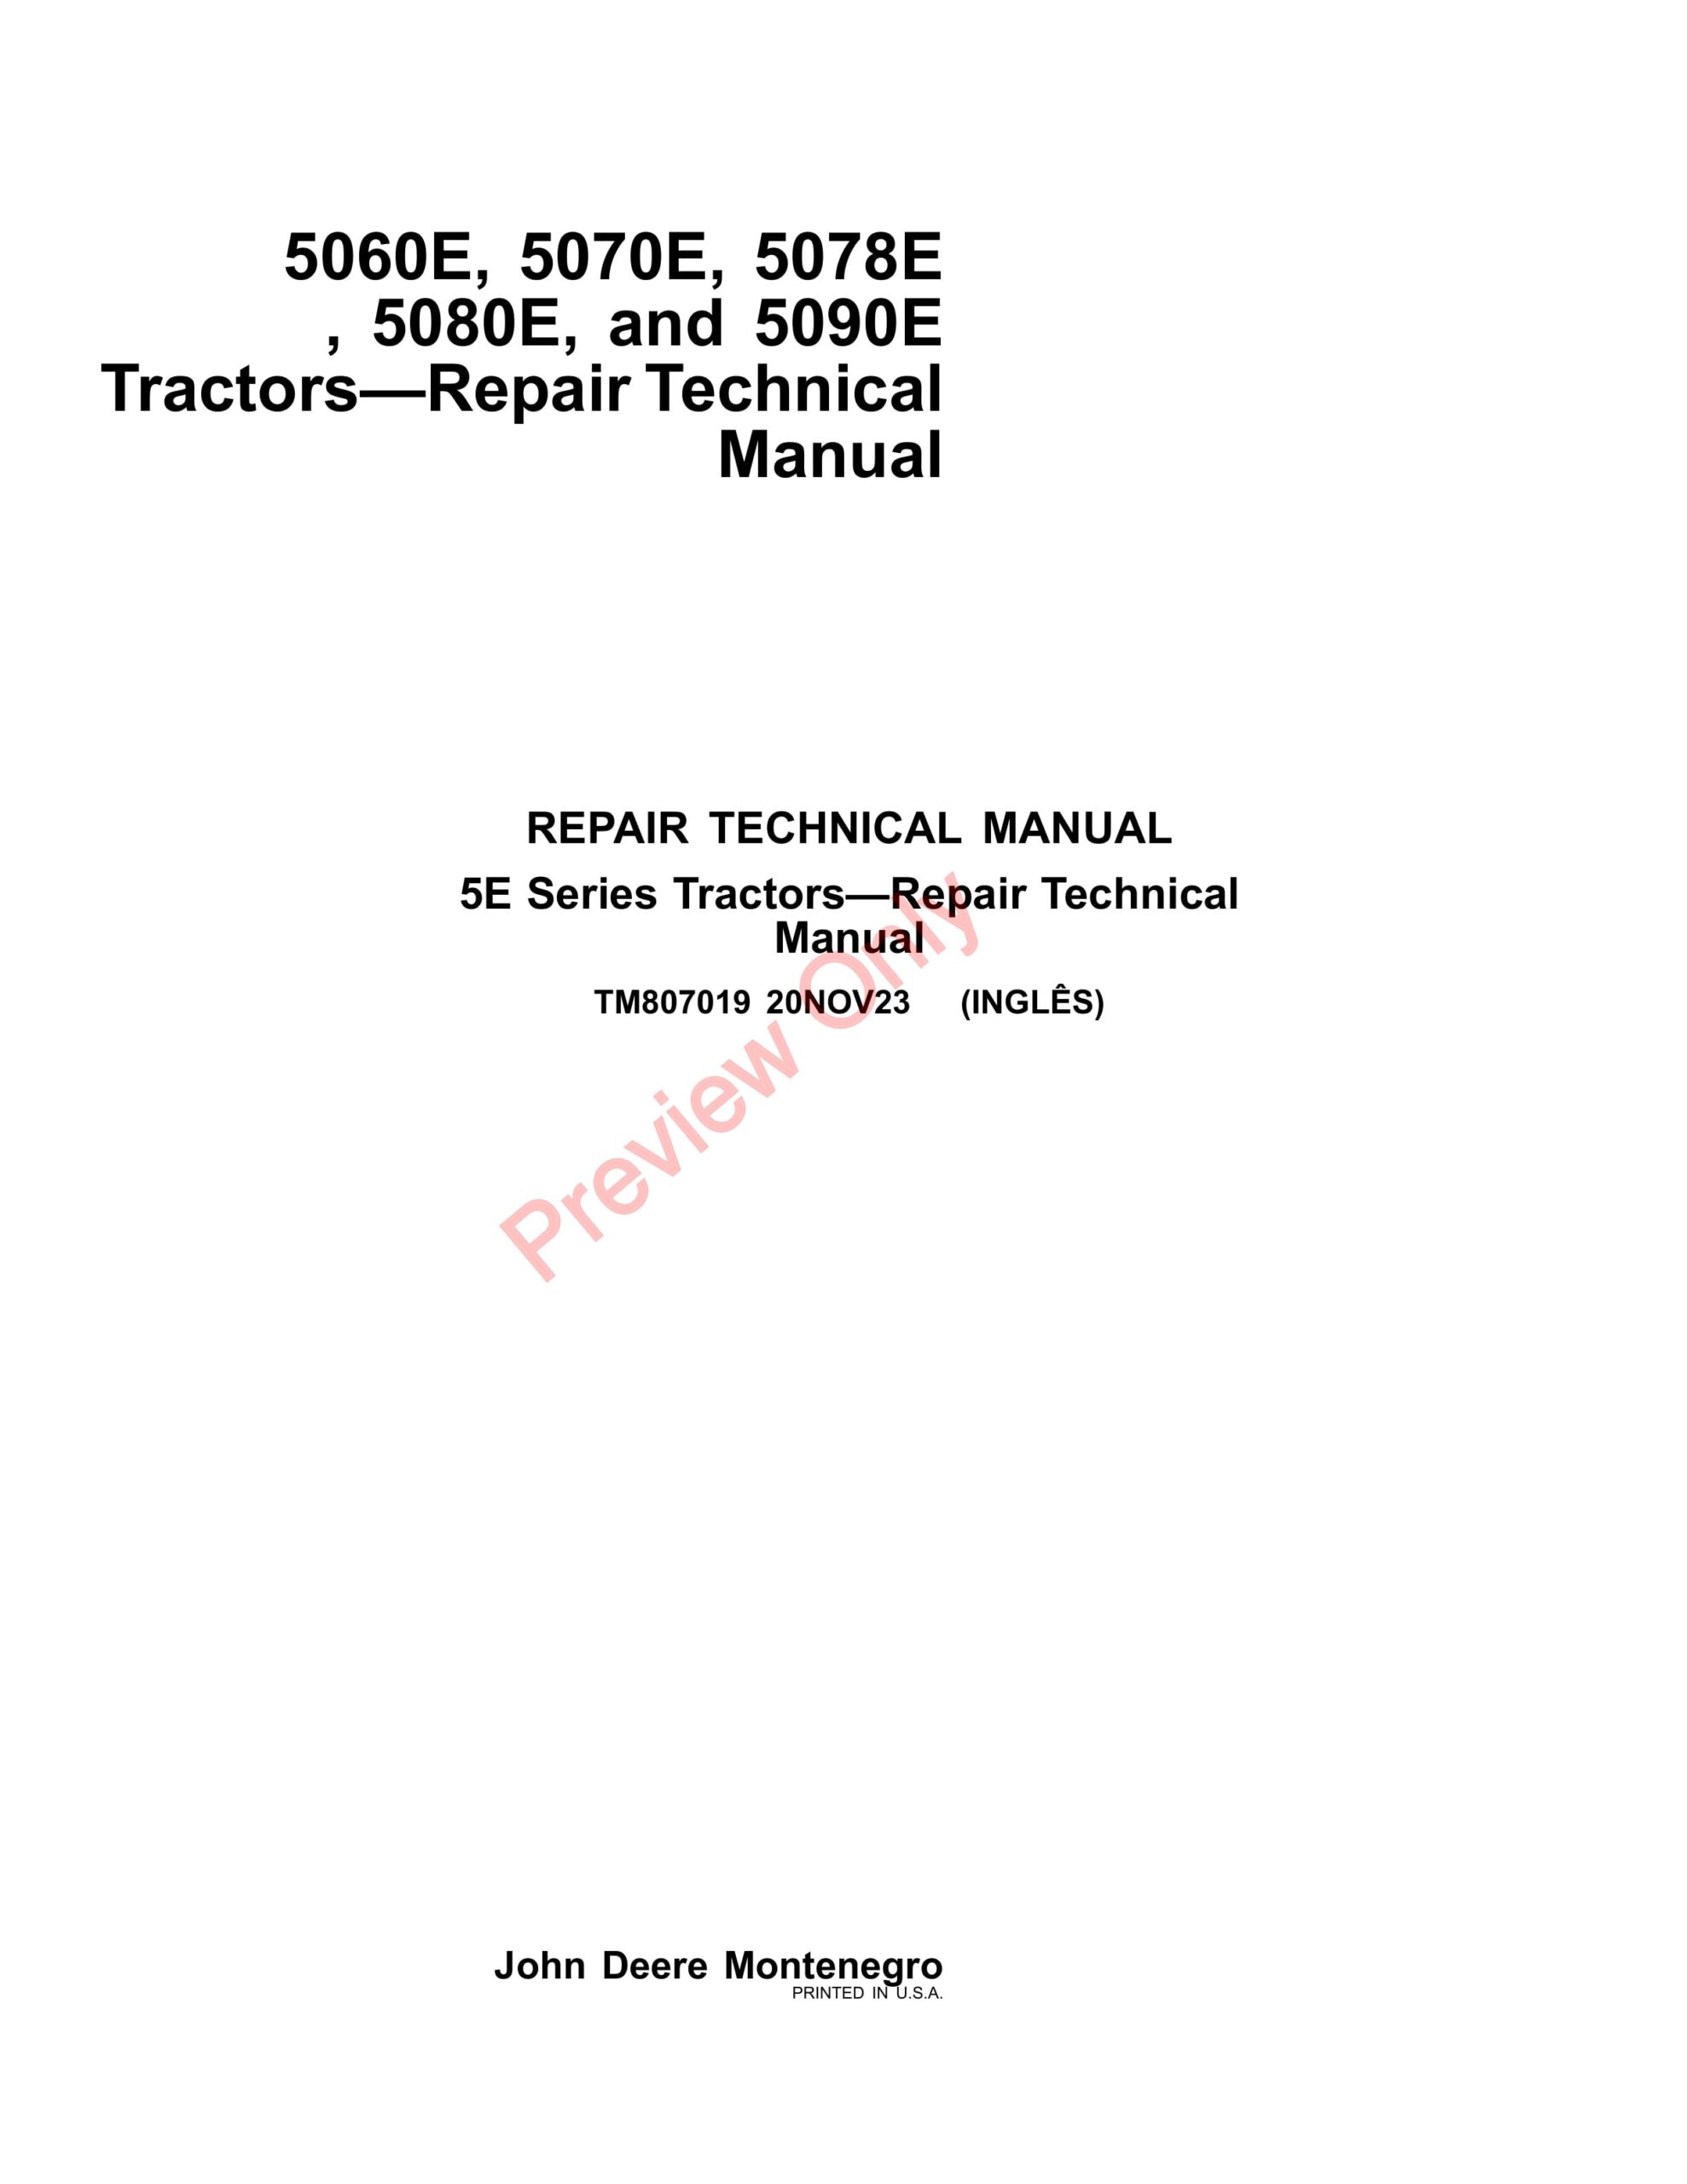 John Deere 5060E, 5070E, 5078E , 5080E, and 5090E Tractors Repair Technical Manual TM807019 14NOV23-1